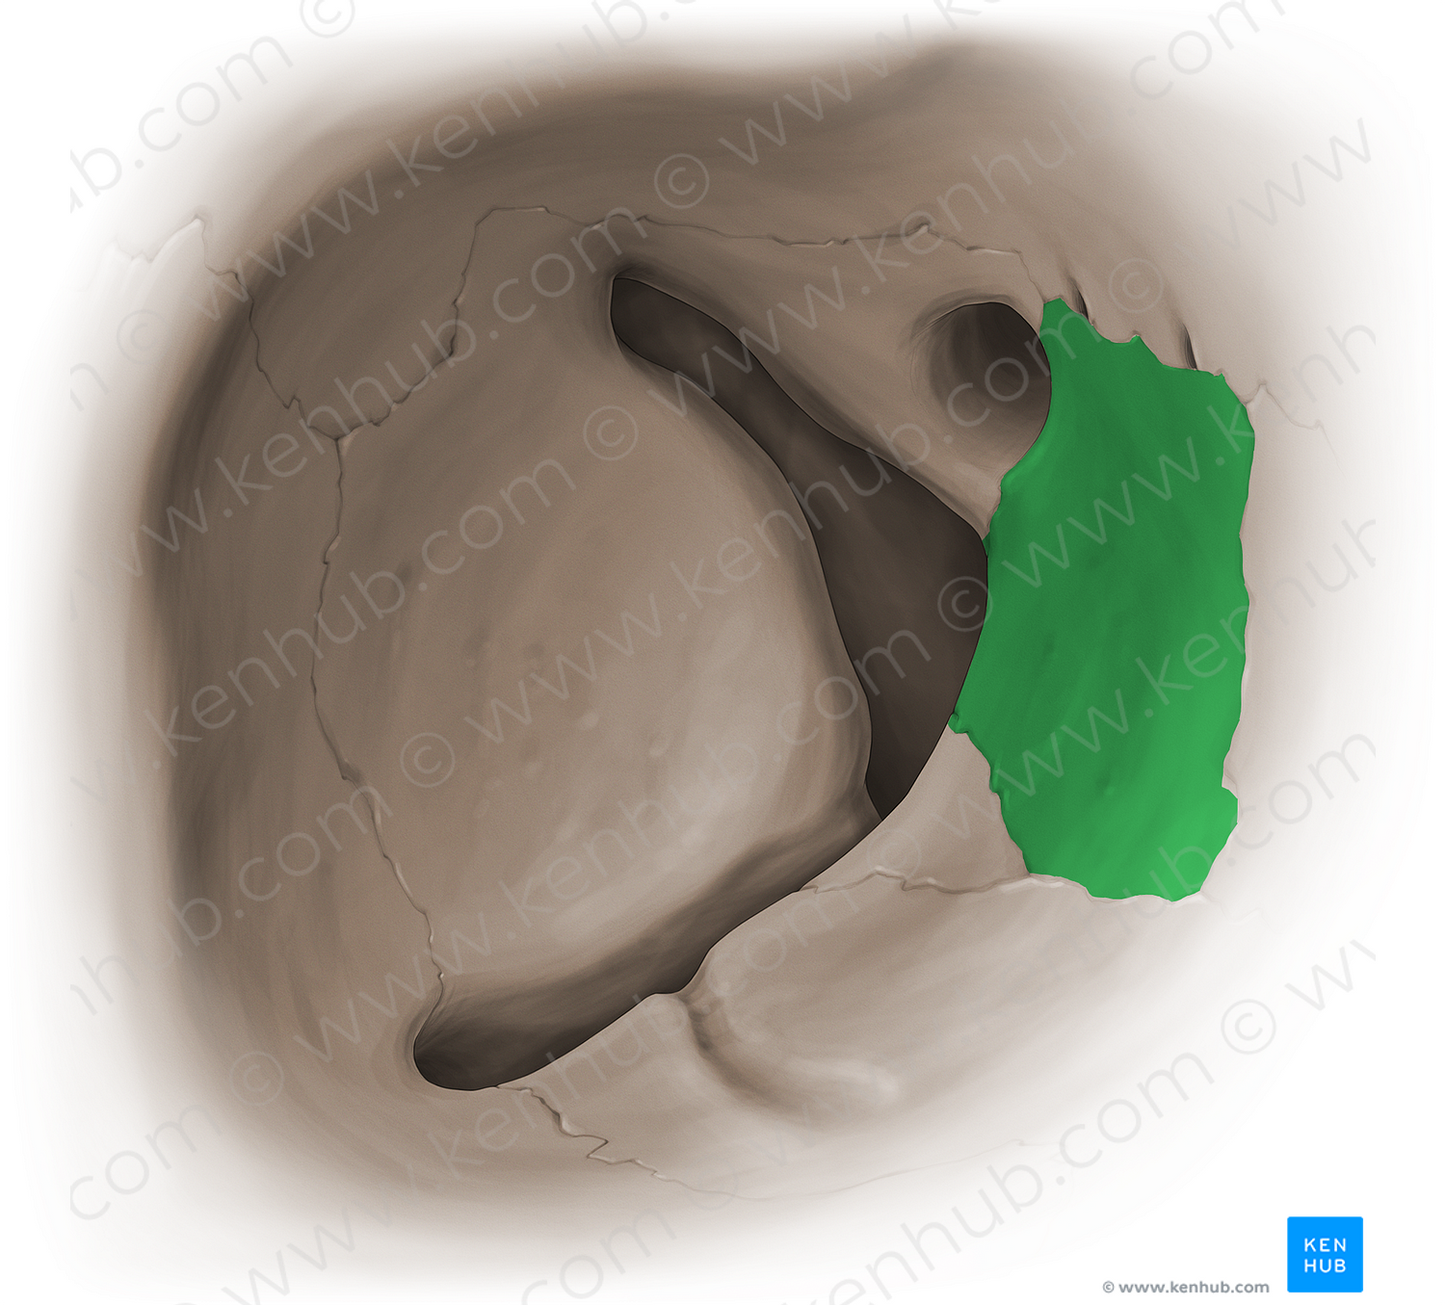 Orbital plate of ethmoid bone (#16079)